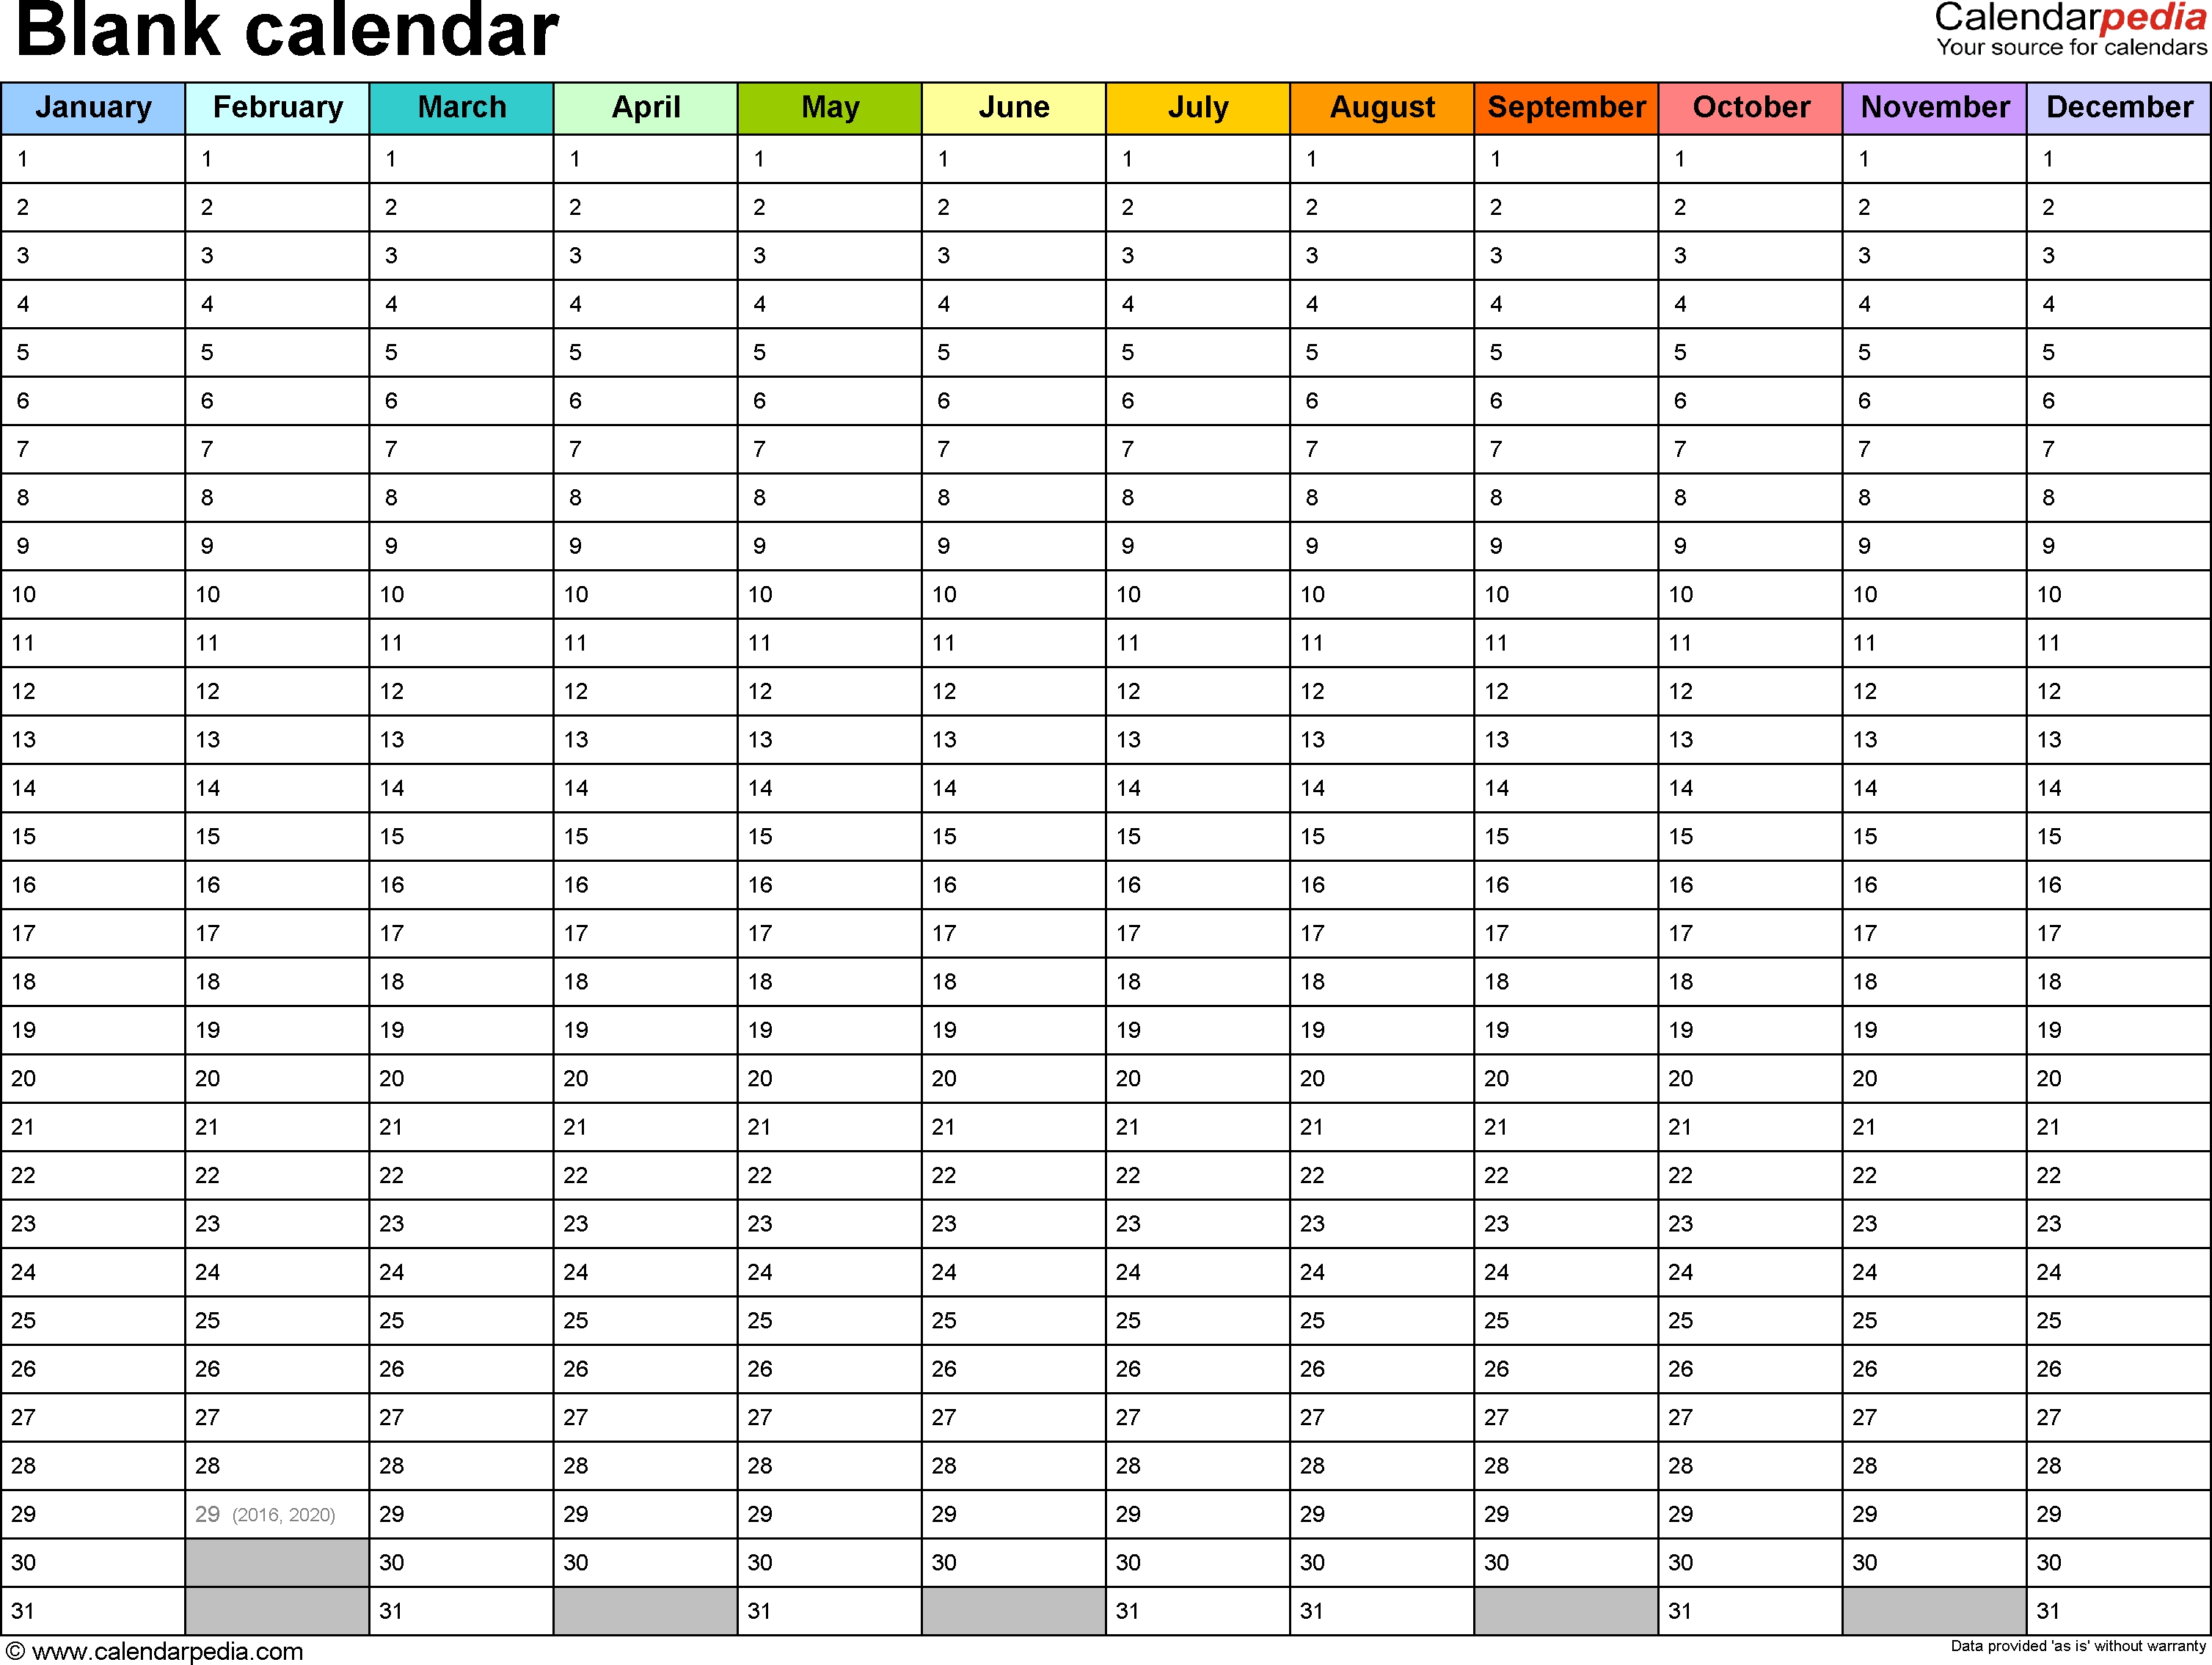 Blank Calendar - 9 Free Printable Microsoft Word Templates Calendar Template I Can Type In